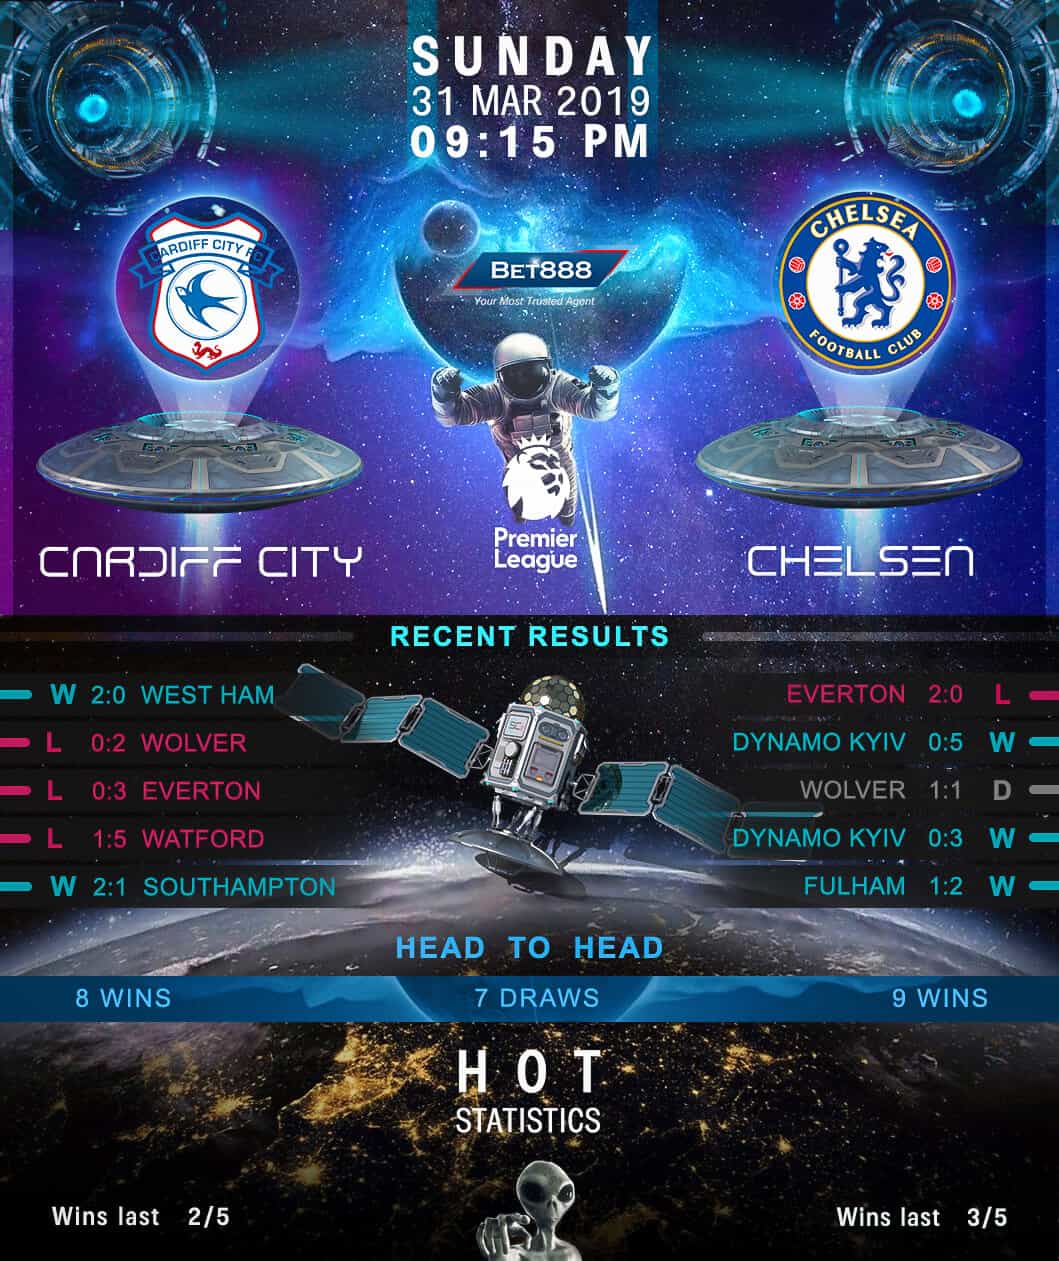 Cardiff City vs Chelsea 31/03/19